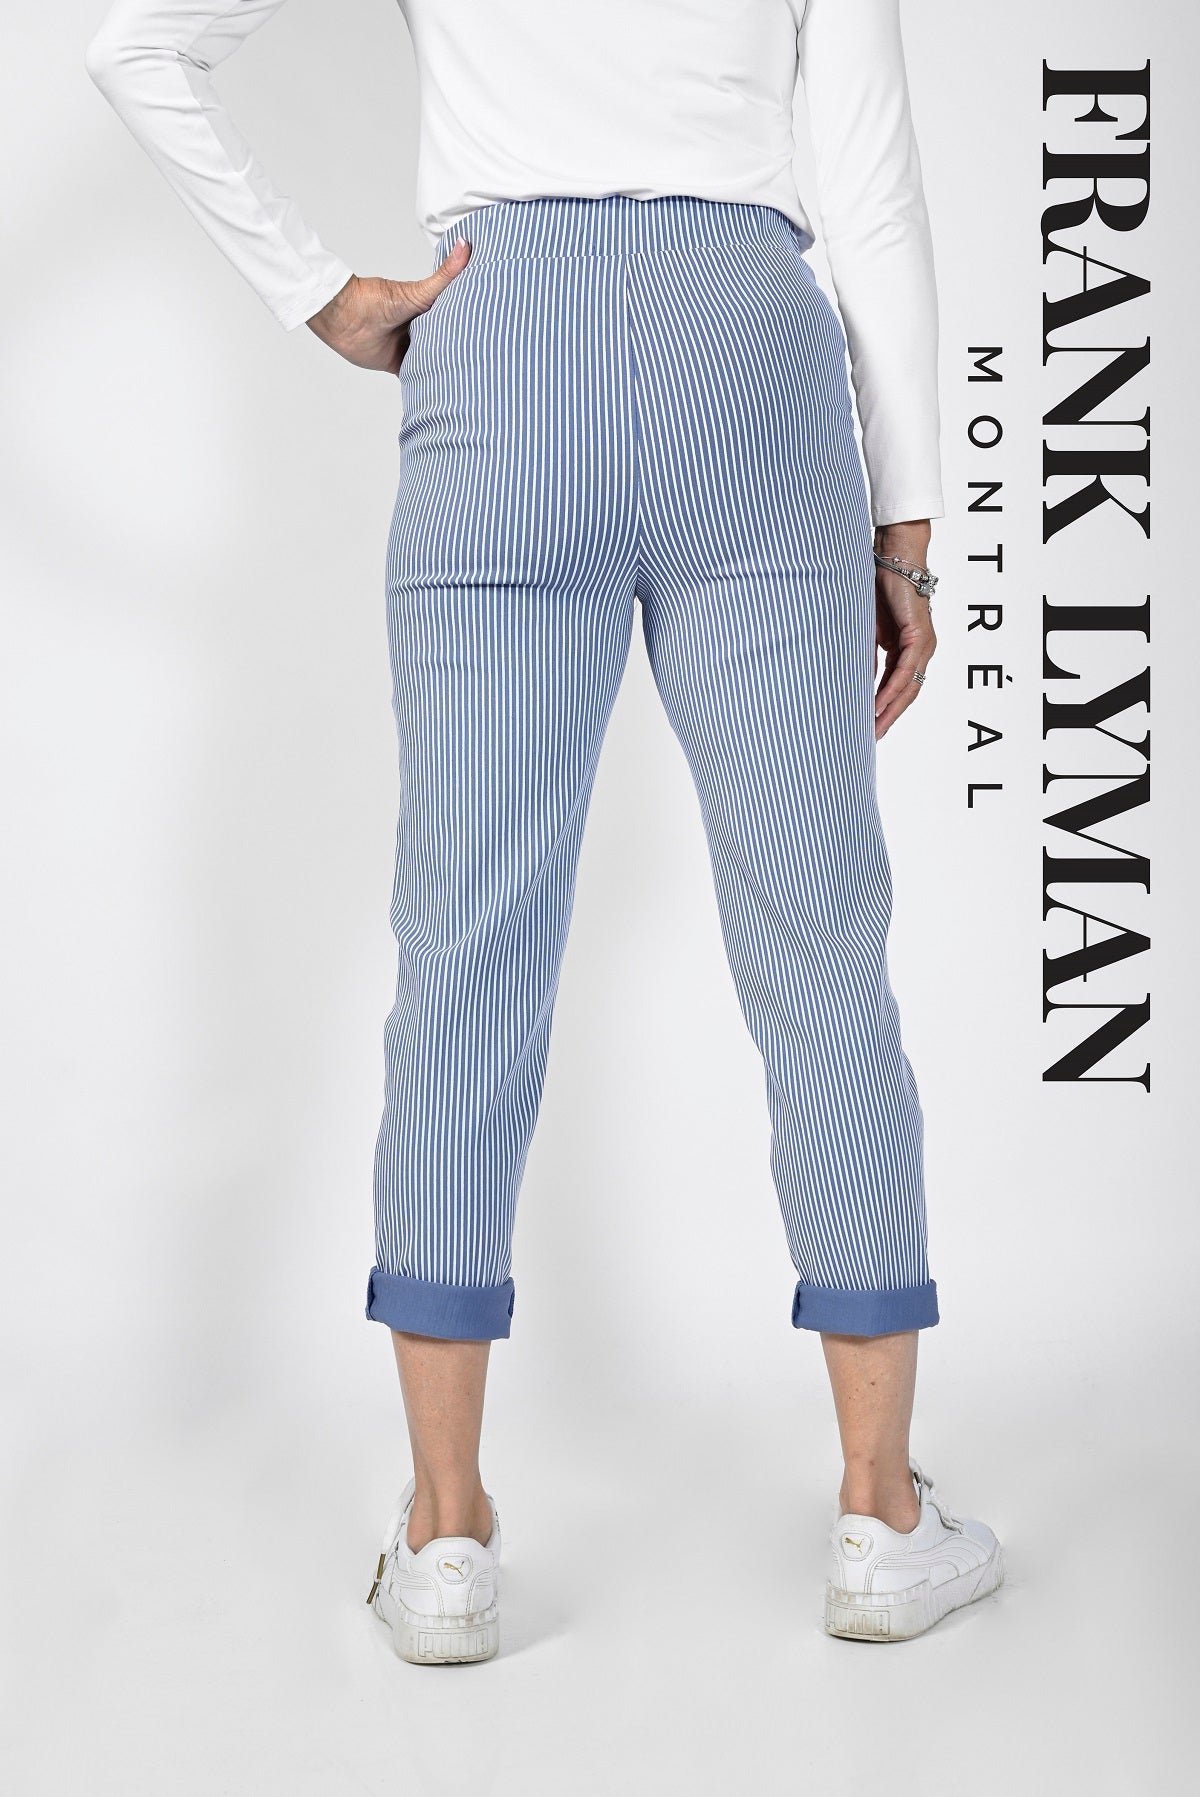 Frank Lyman Montreal Pants-Frank Lyman Montreal Seersucker Pants-Buy Frank Lyman Montreal Clothing Online-Seersucker Pants Online Canada